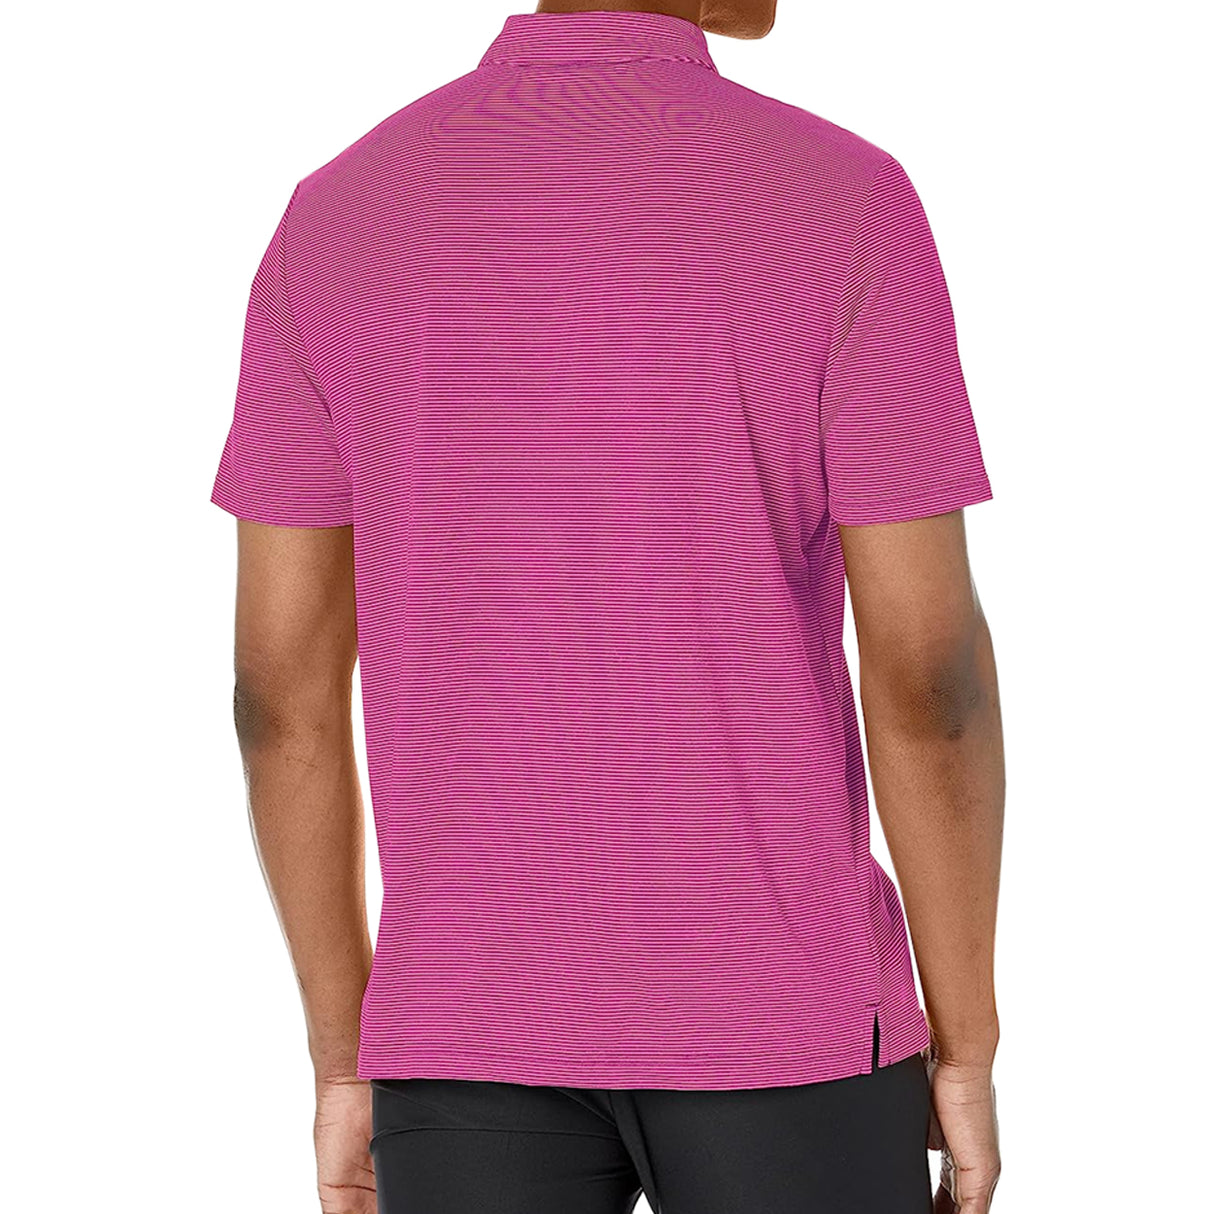 Adidas Men's Ottoman Striped Polo Golf Shirt